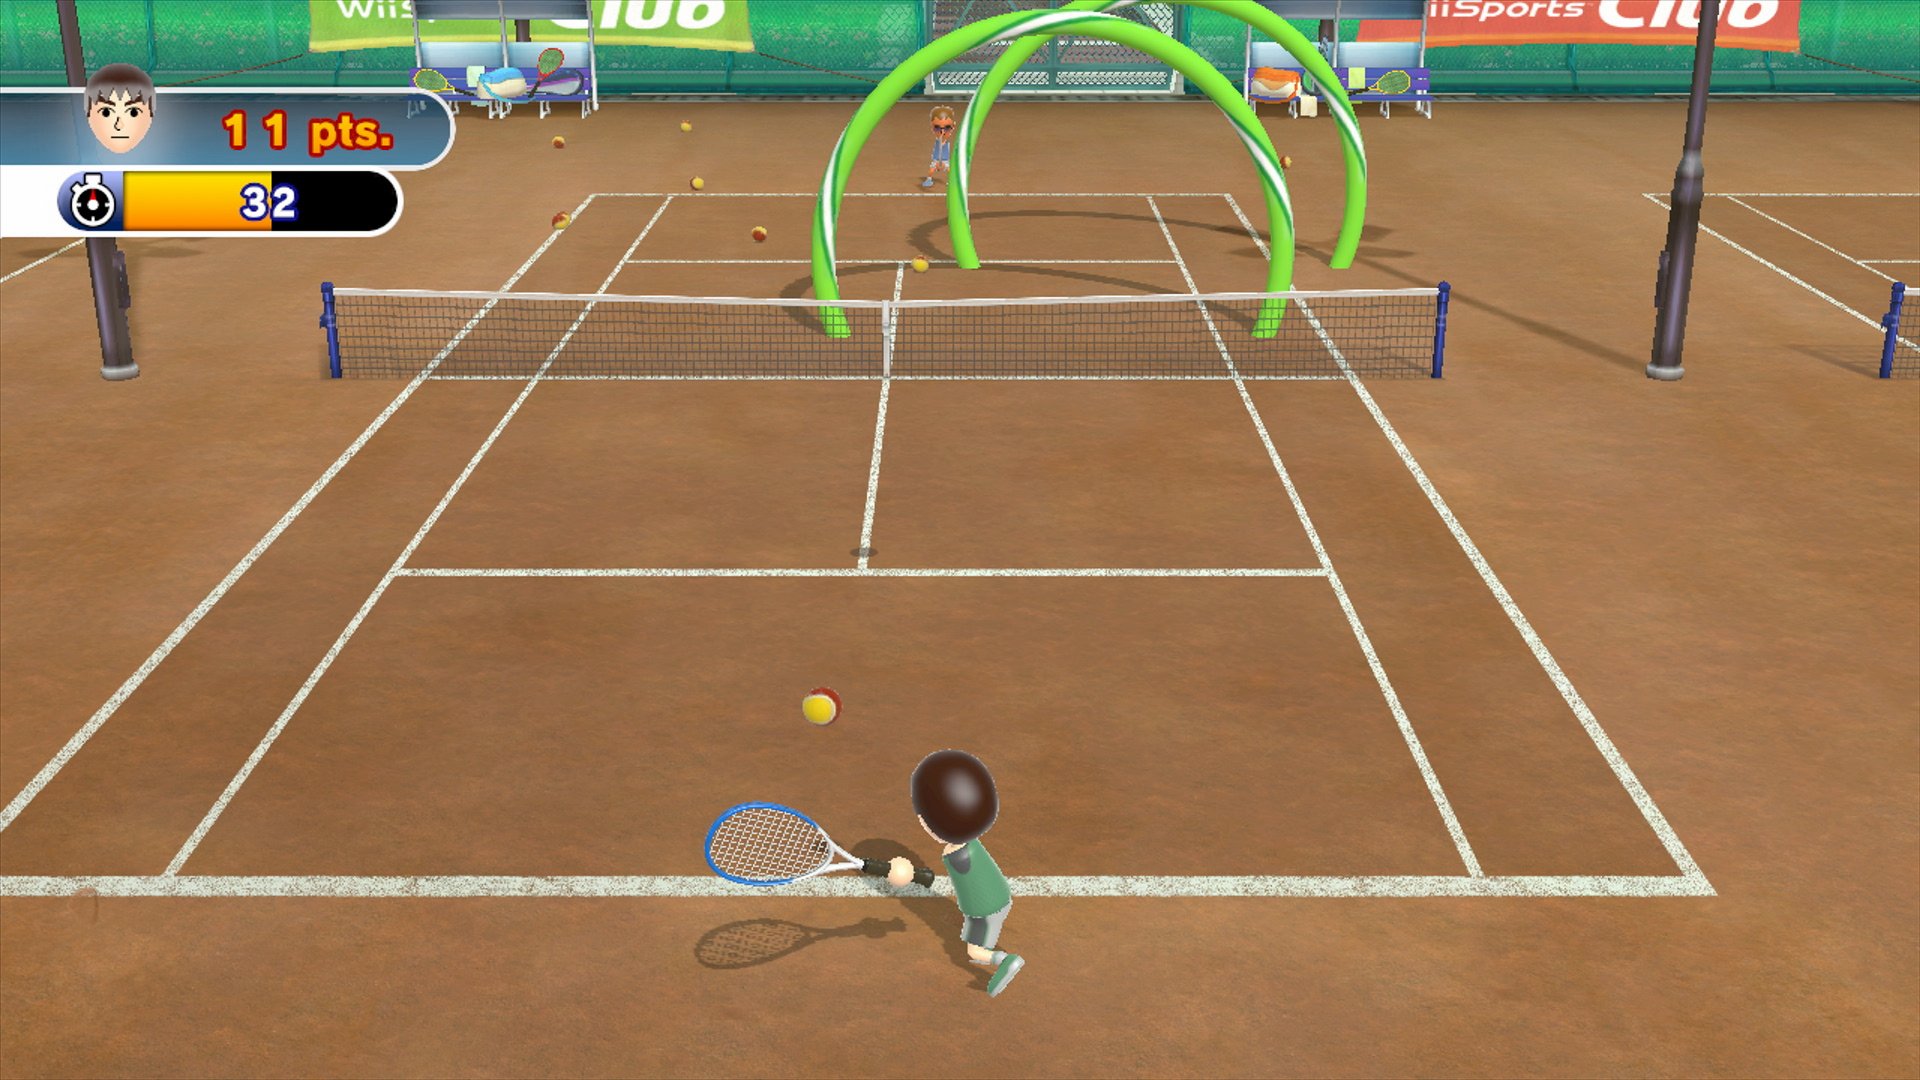 Wii Sports Club Tennis Review Wii U Eshop Nintendo Life